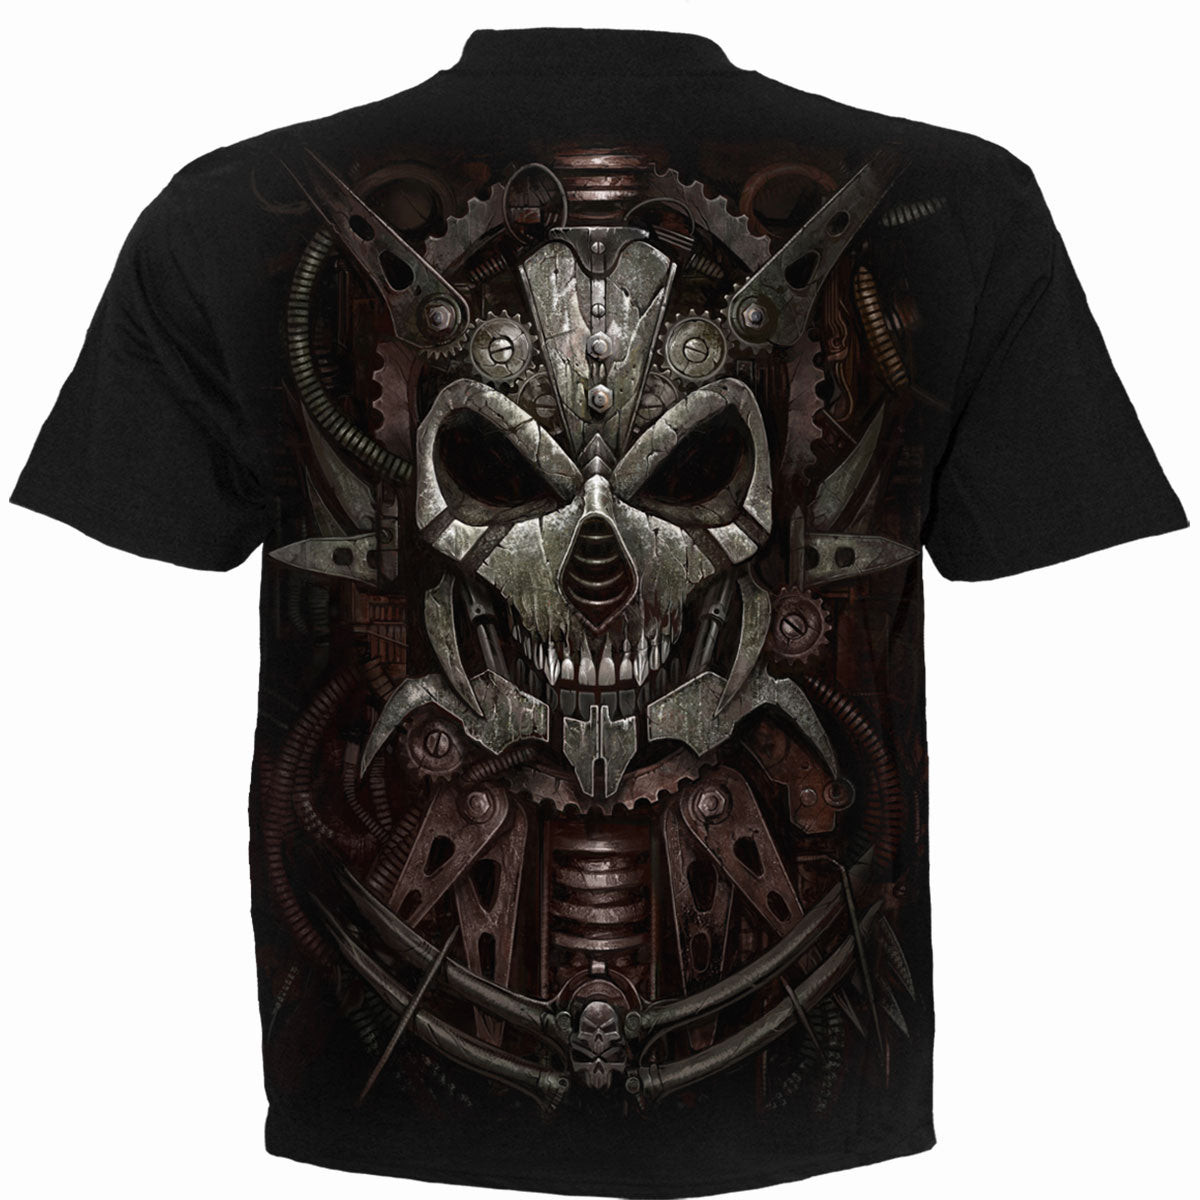 DIESEL PUNK - T-Shirt Black